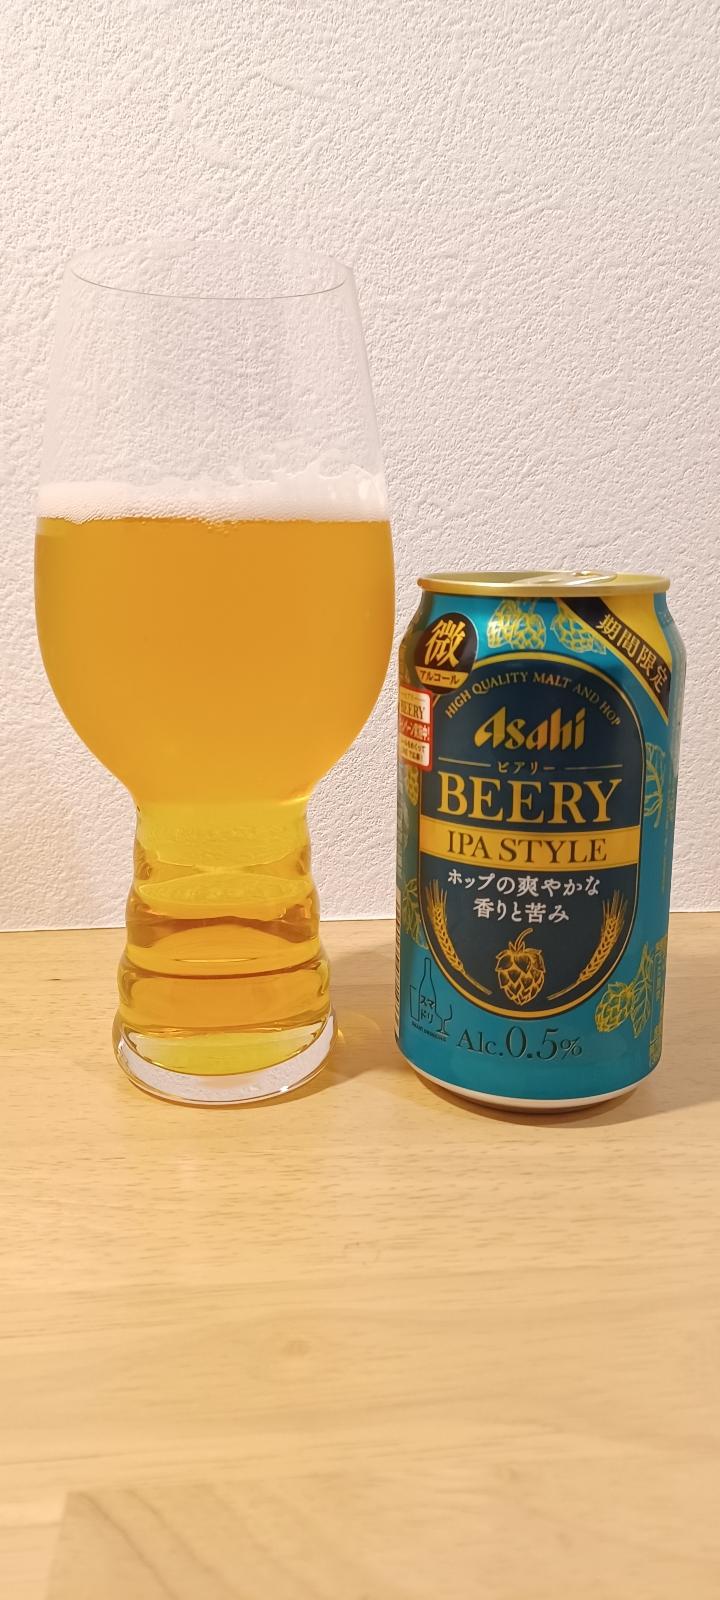 Asahi Beery - IPA Style